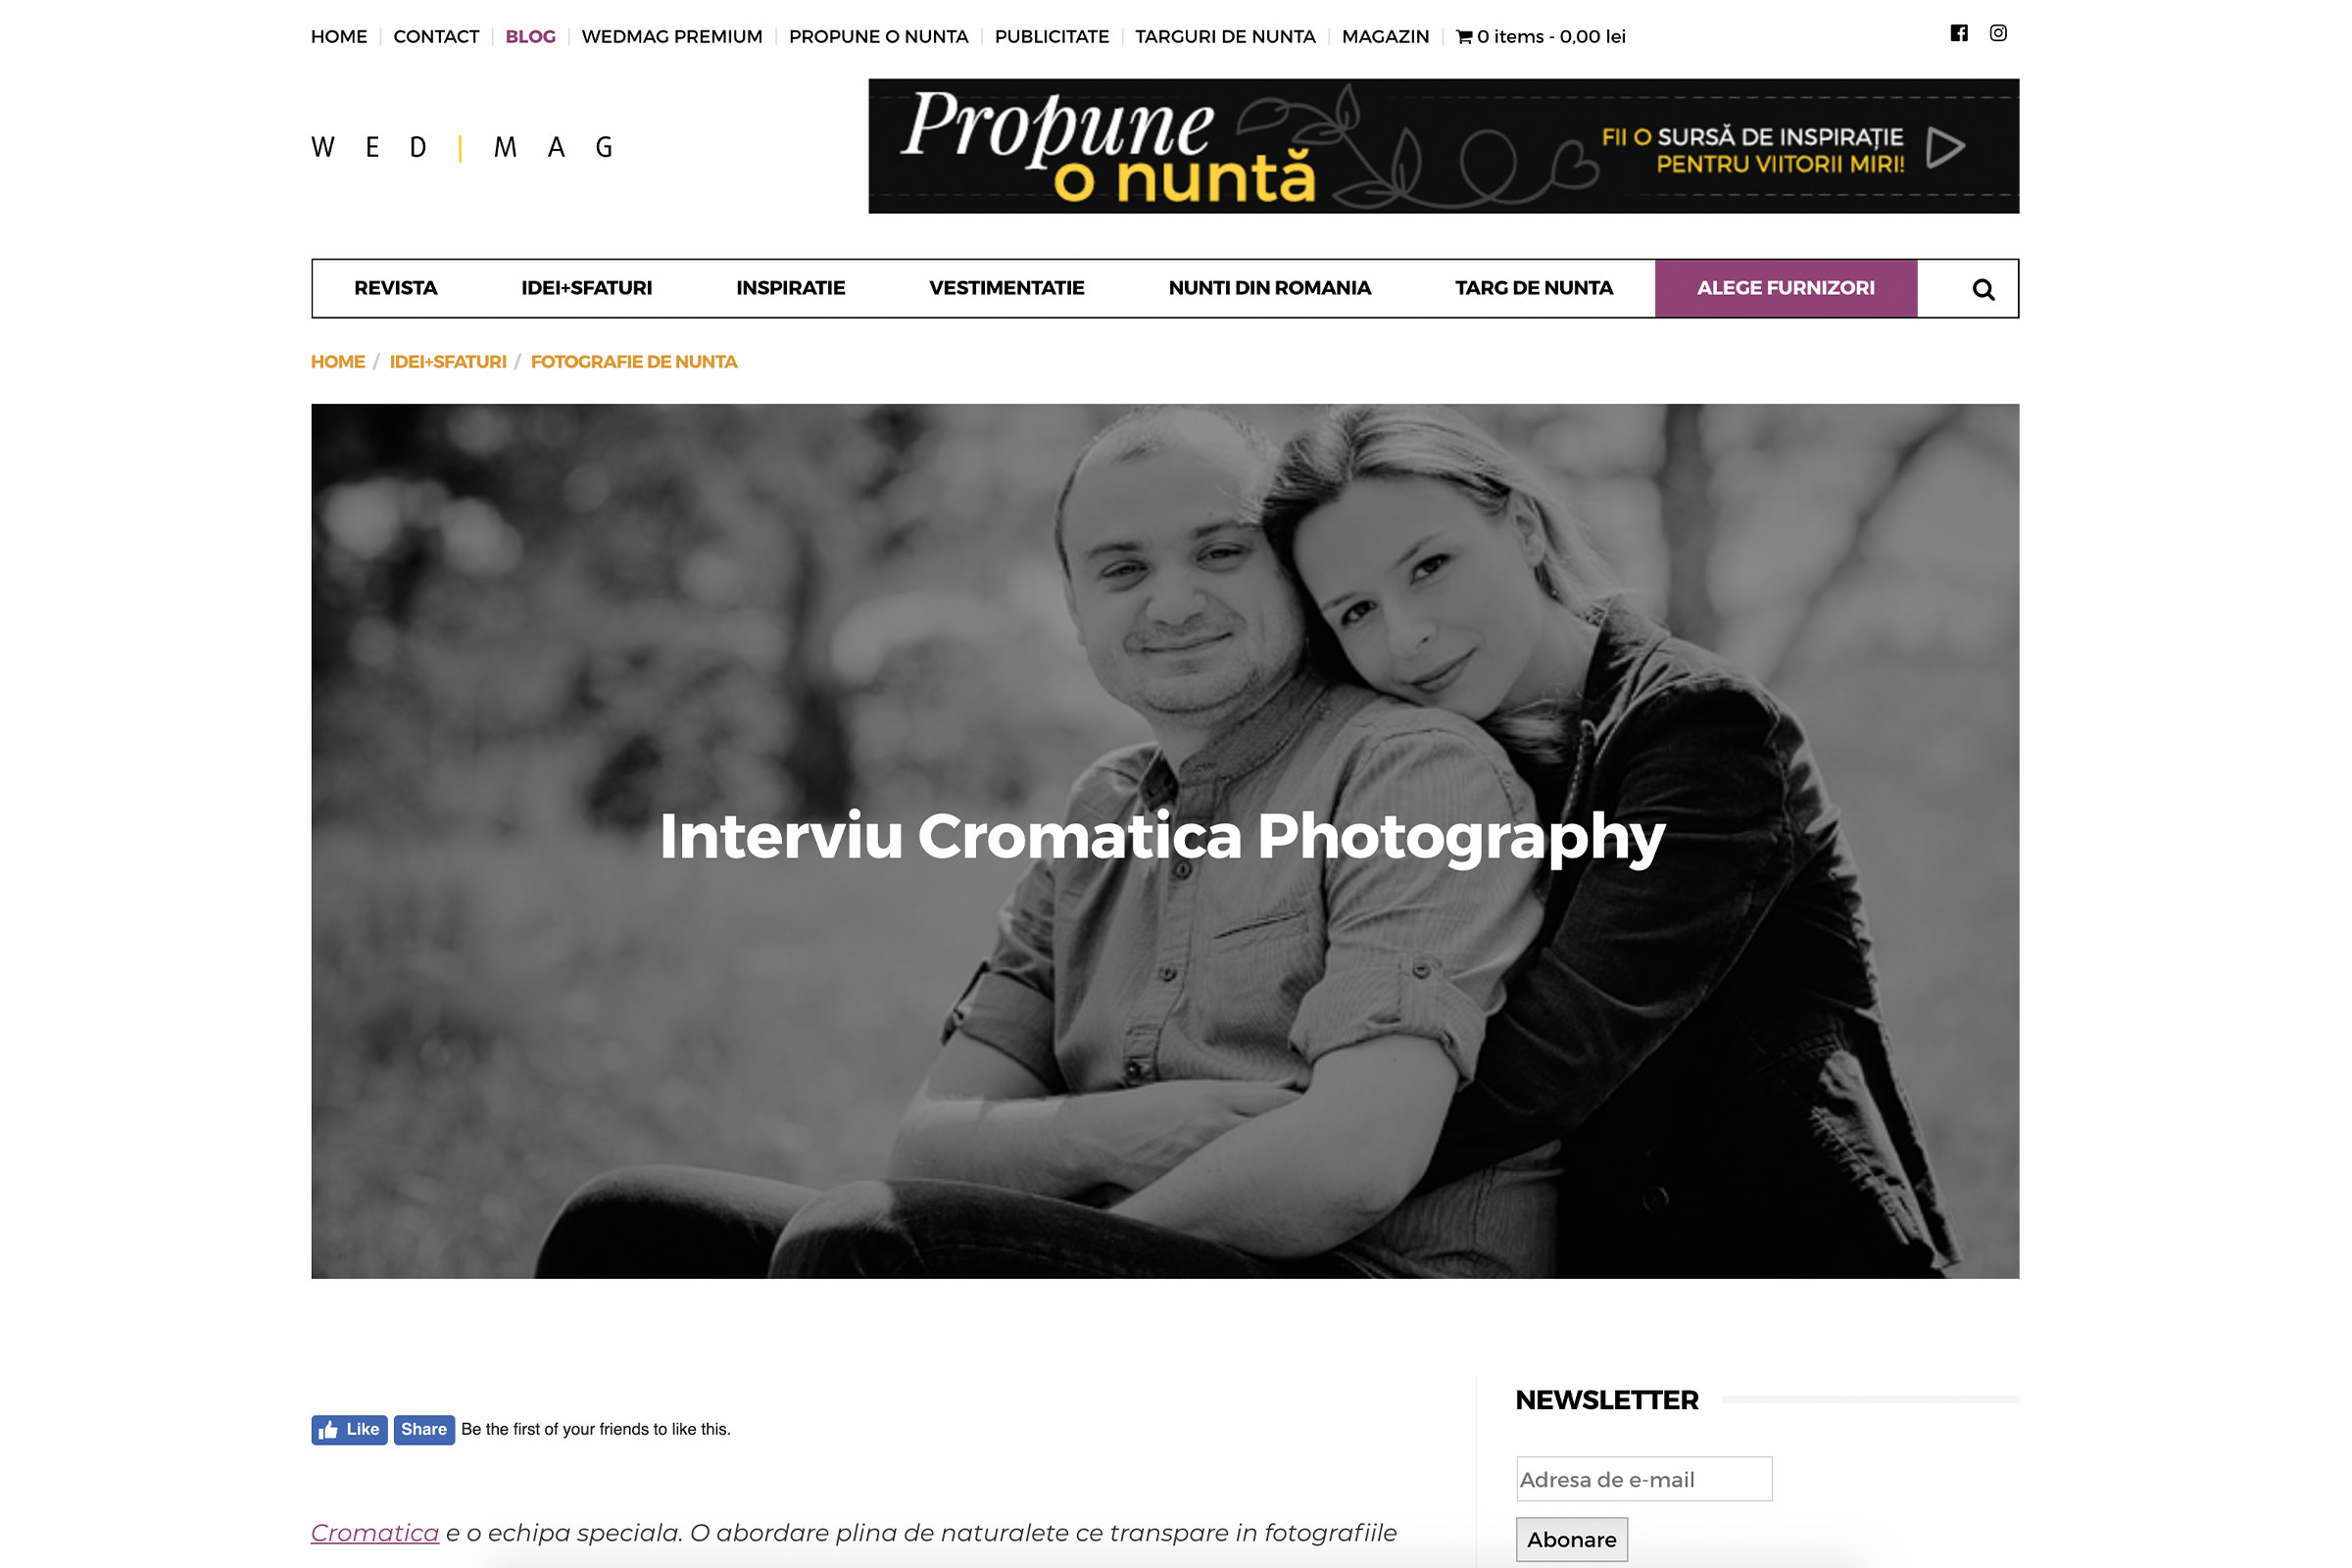 cromatica photography interviu wedmag